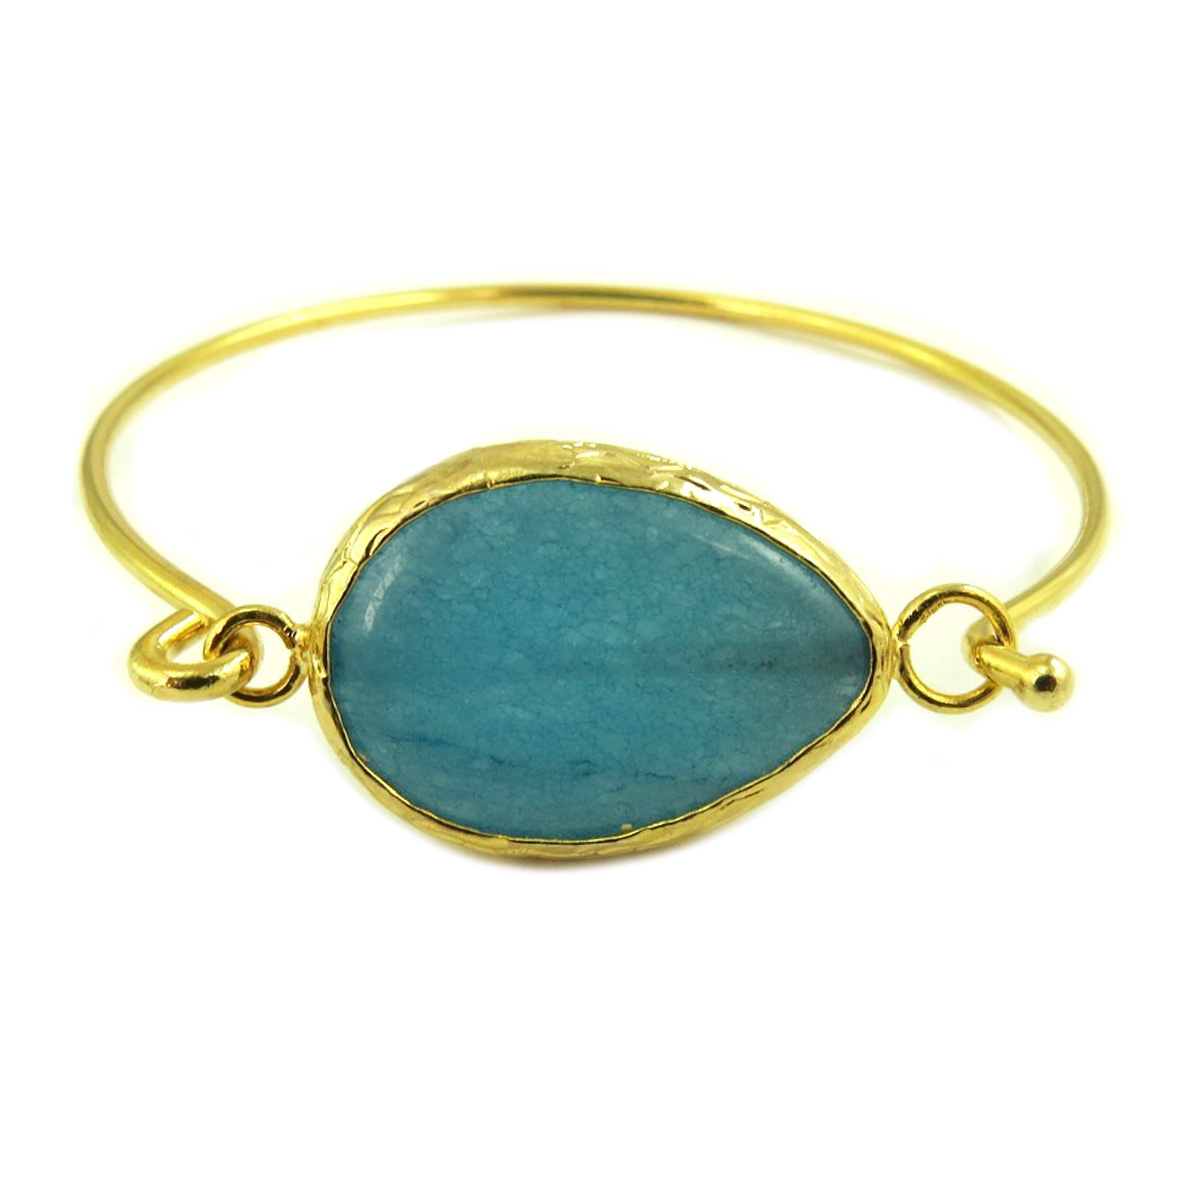 Bracelet artisanal \'Cléopatra\' turquoise doré - 56 mm 25x20 mm - [Q9825]